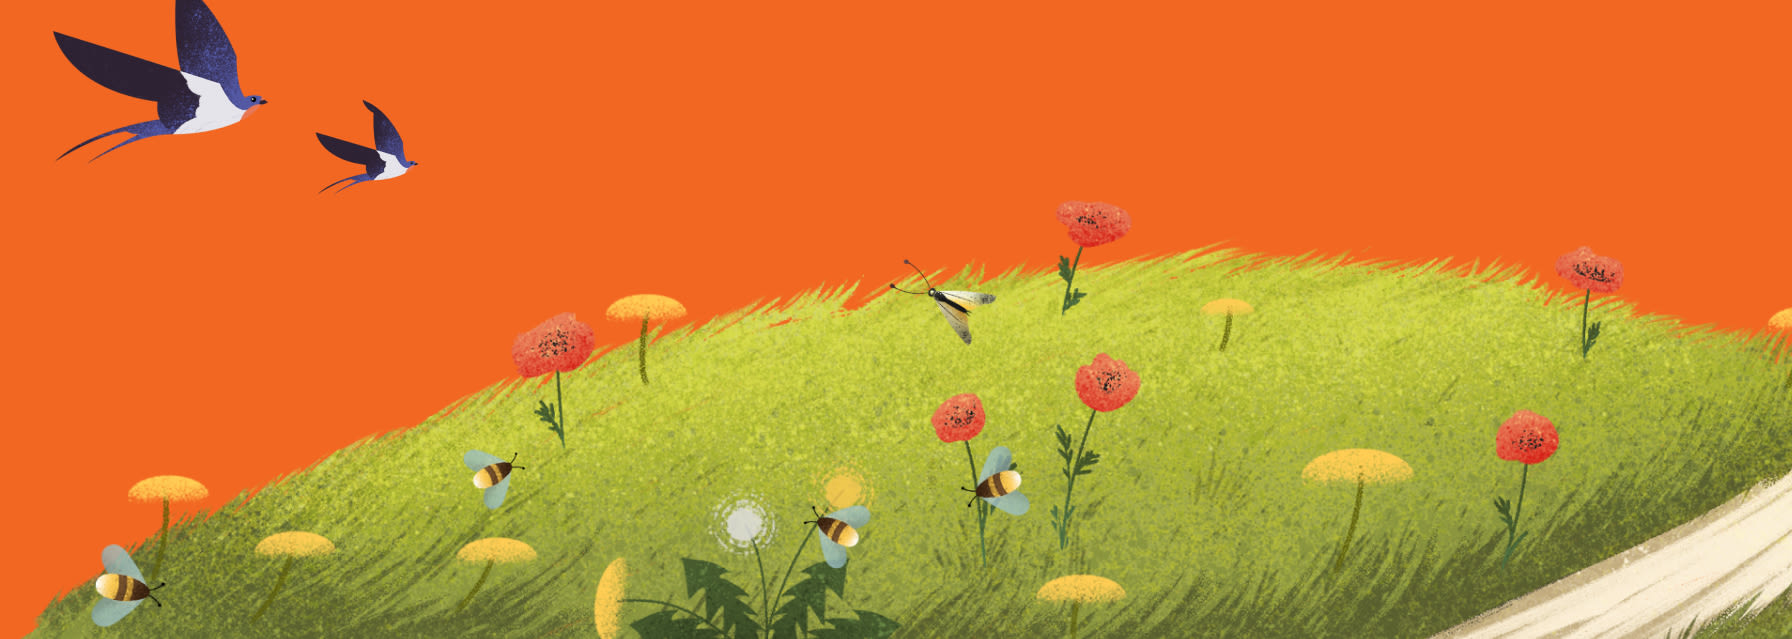 Meadow illustration on orange background with birds